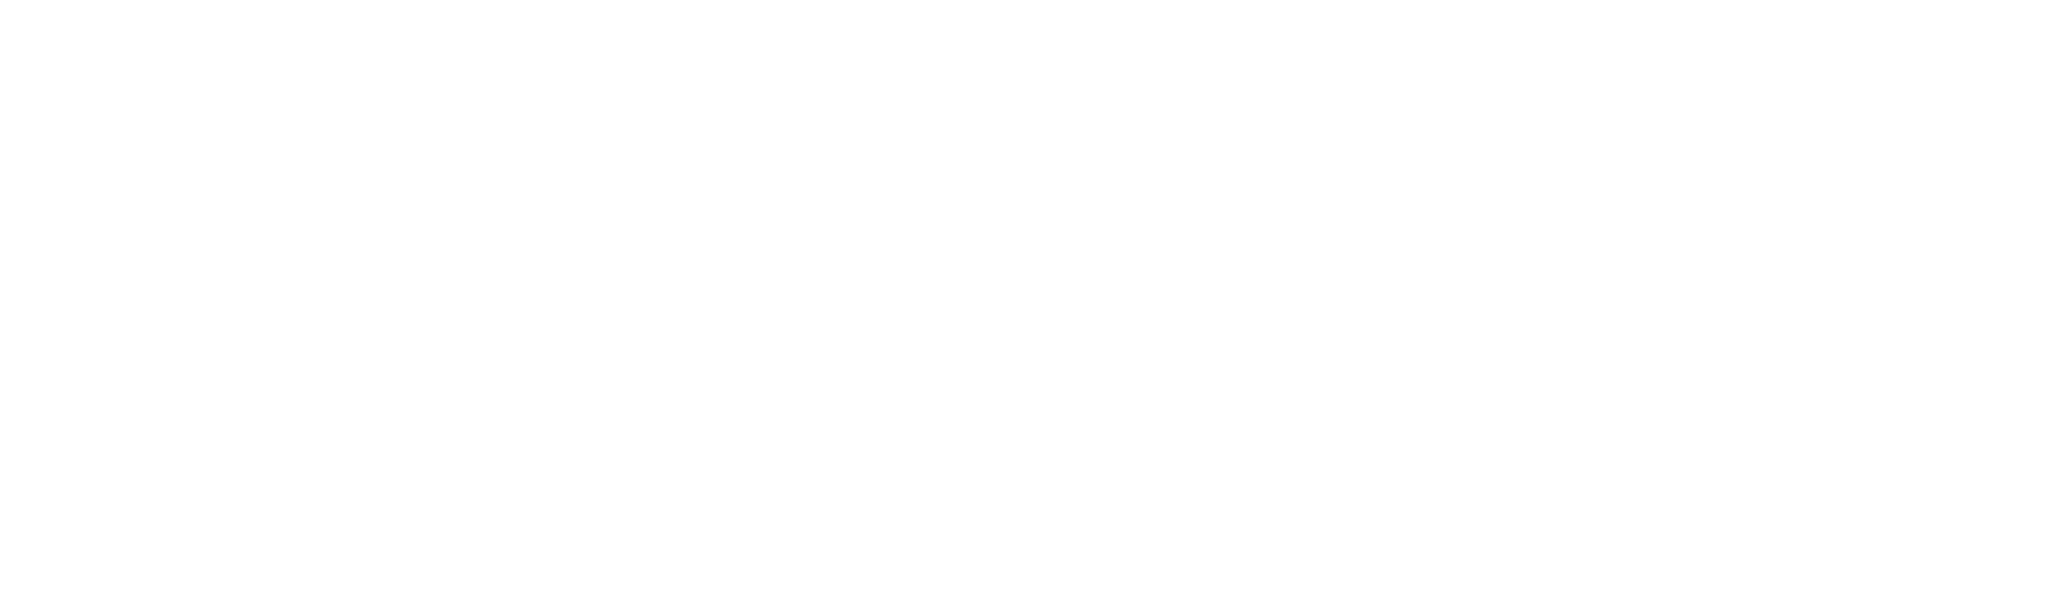 splunk-logo-white